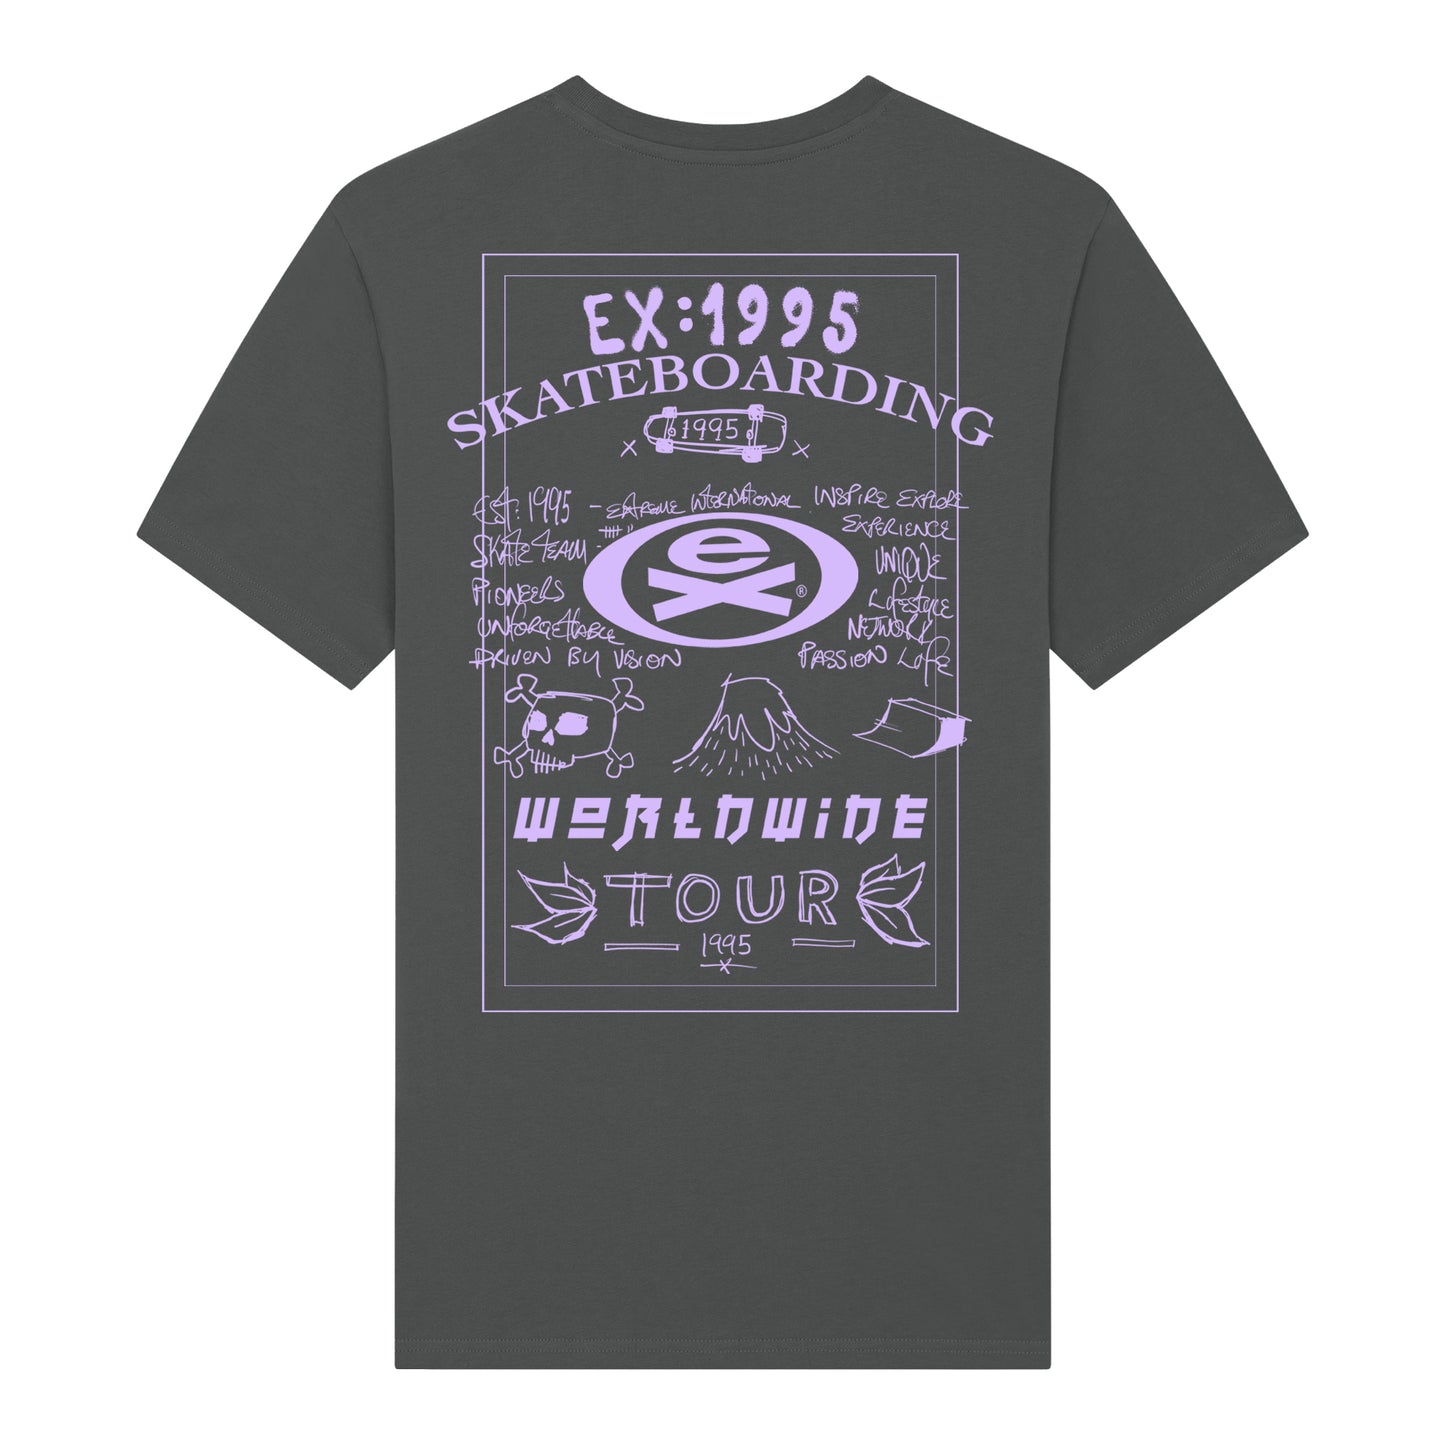 Worldwide Tour T-Shirt - India Ink